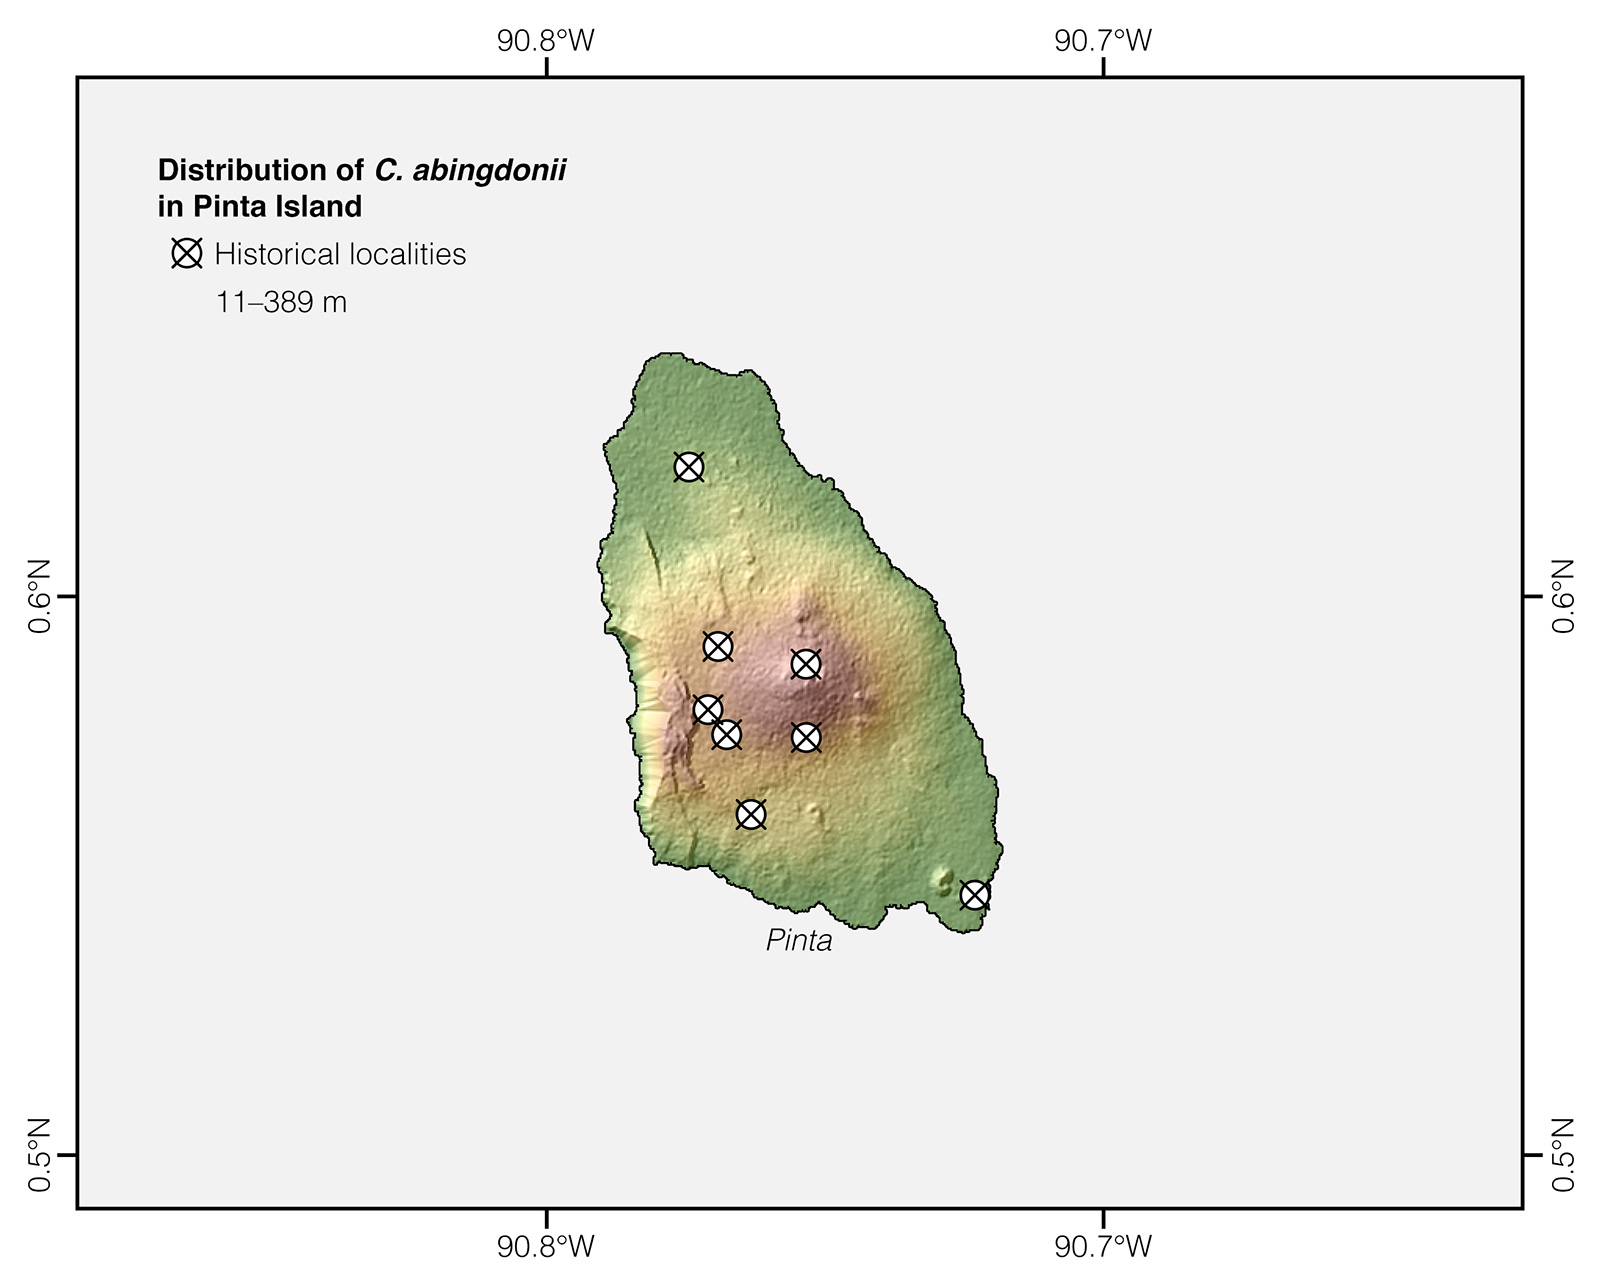 Distribution of Chelonoidis abingdonii in Pinta Island